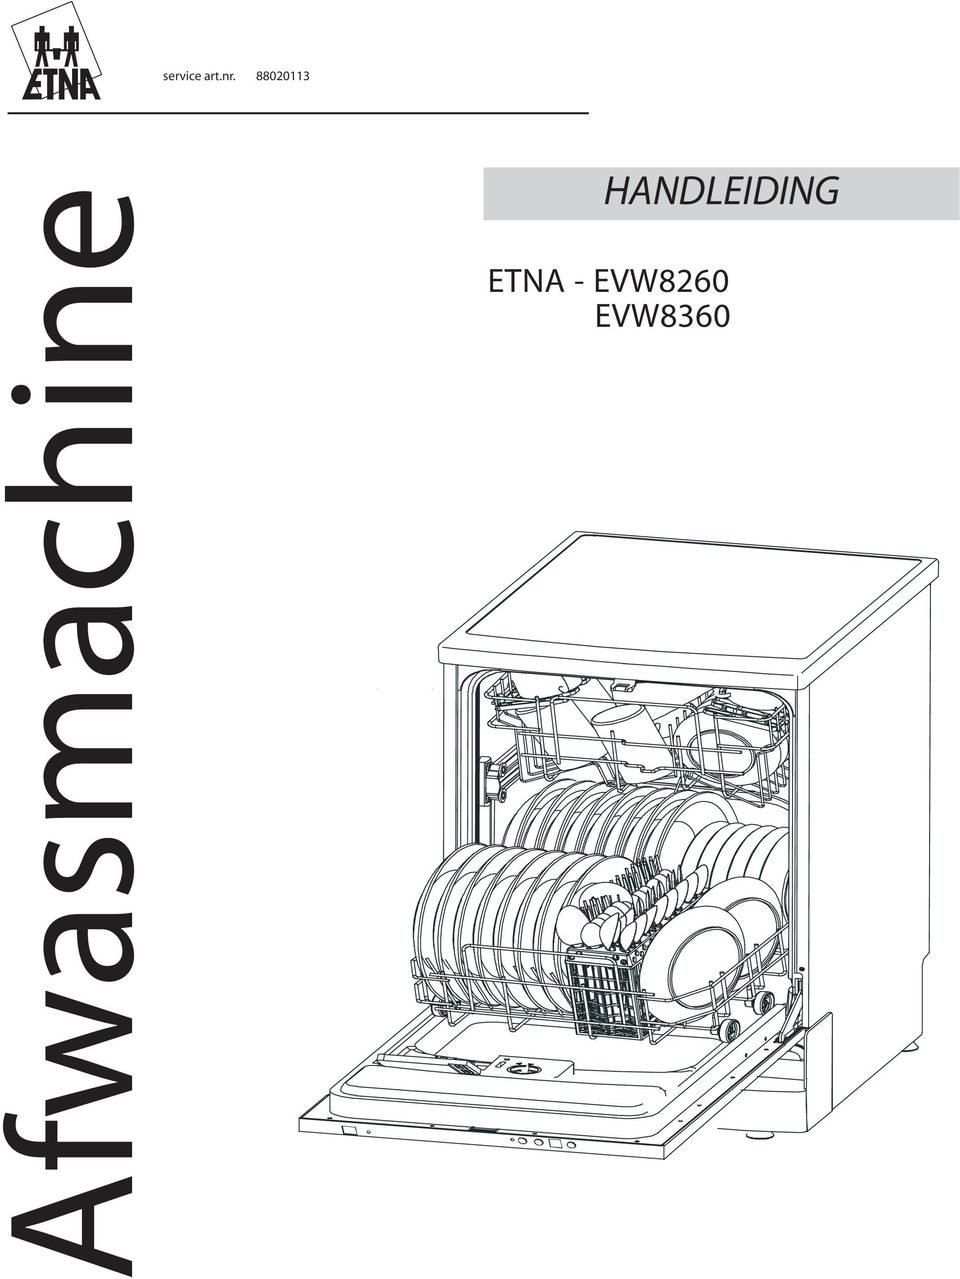 service art.nr HANDLEIDING Afwasmachine ETNA - EVW8260 EVW PDF Free Download